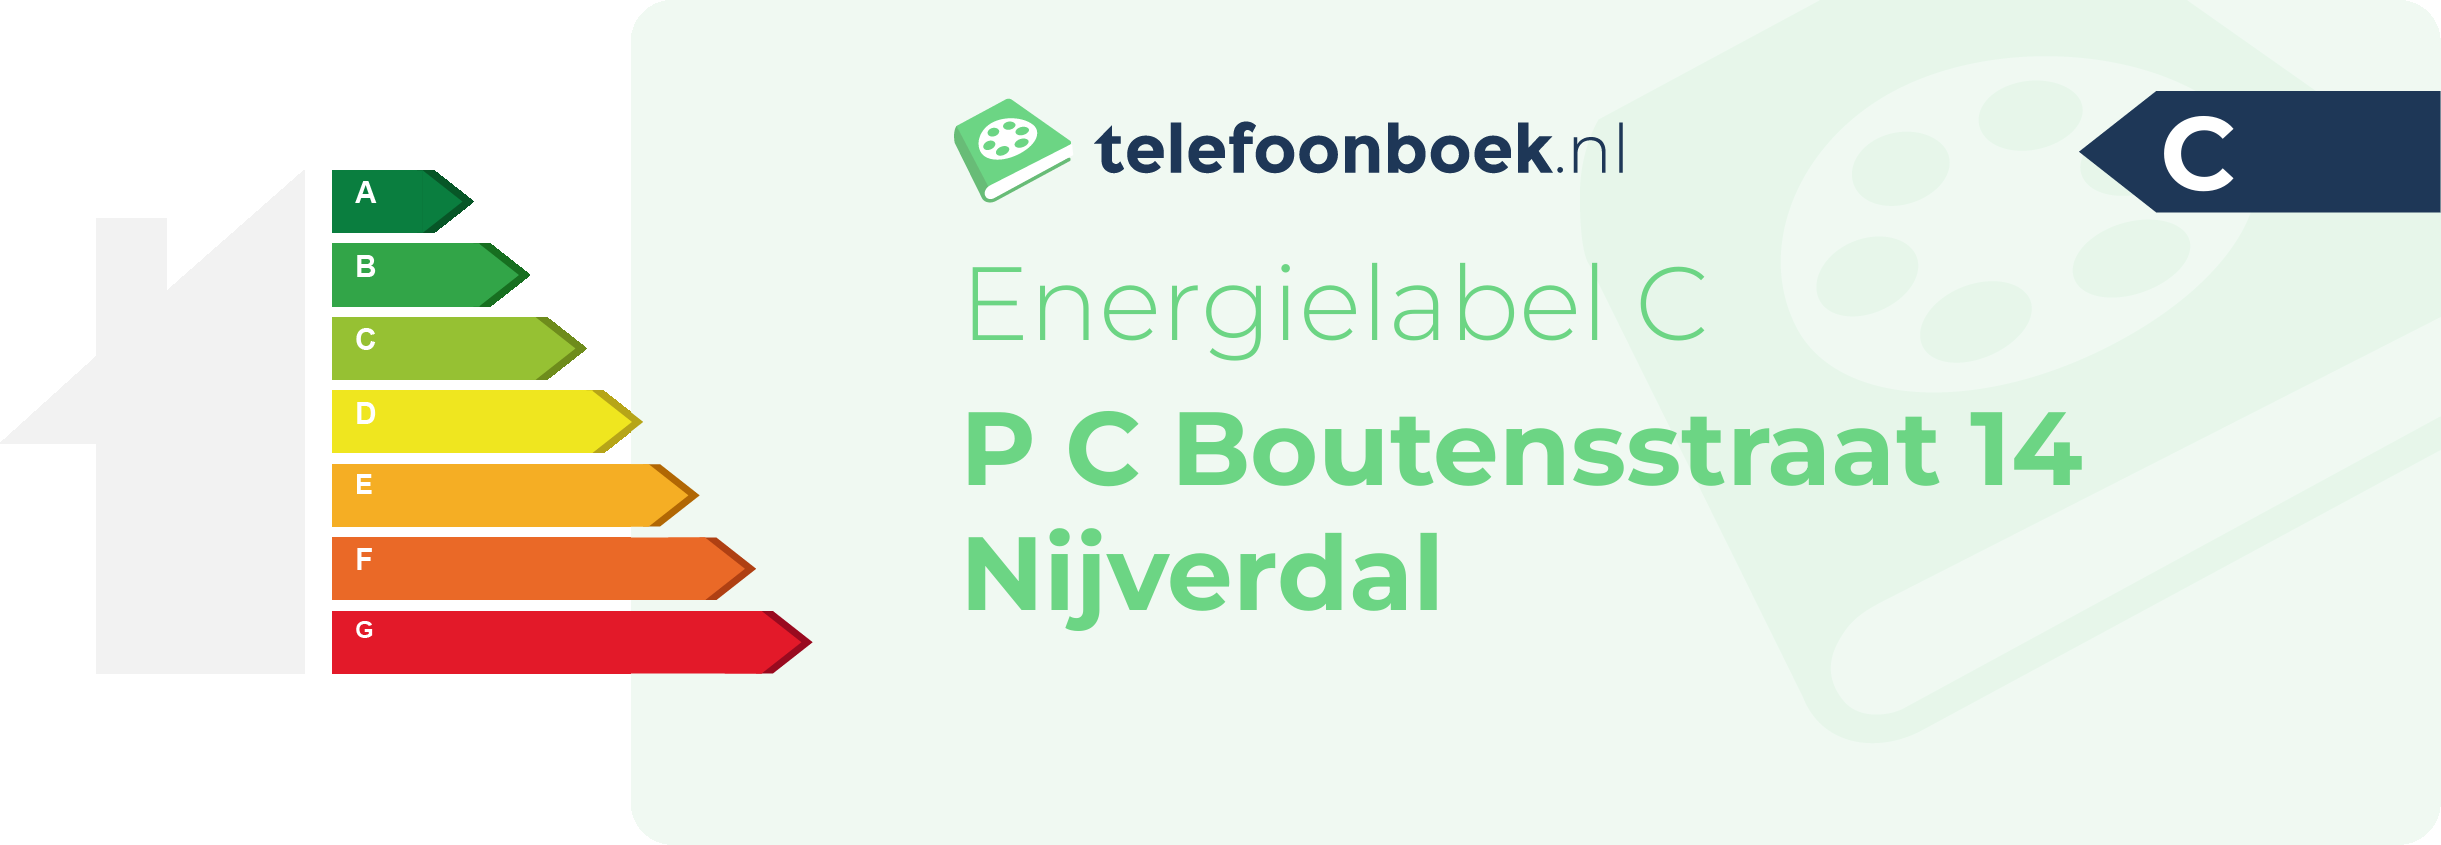 Energielabel P C Boutensstraat 14 Nijverdal